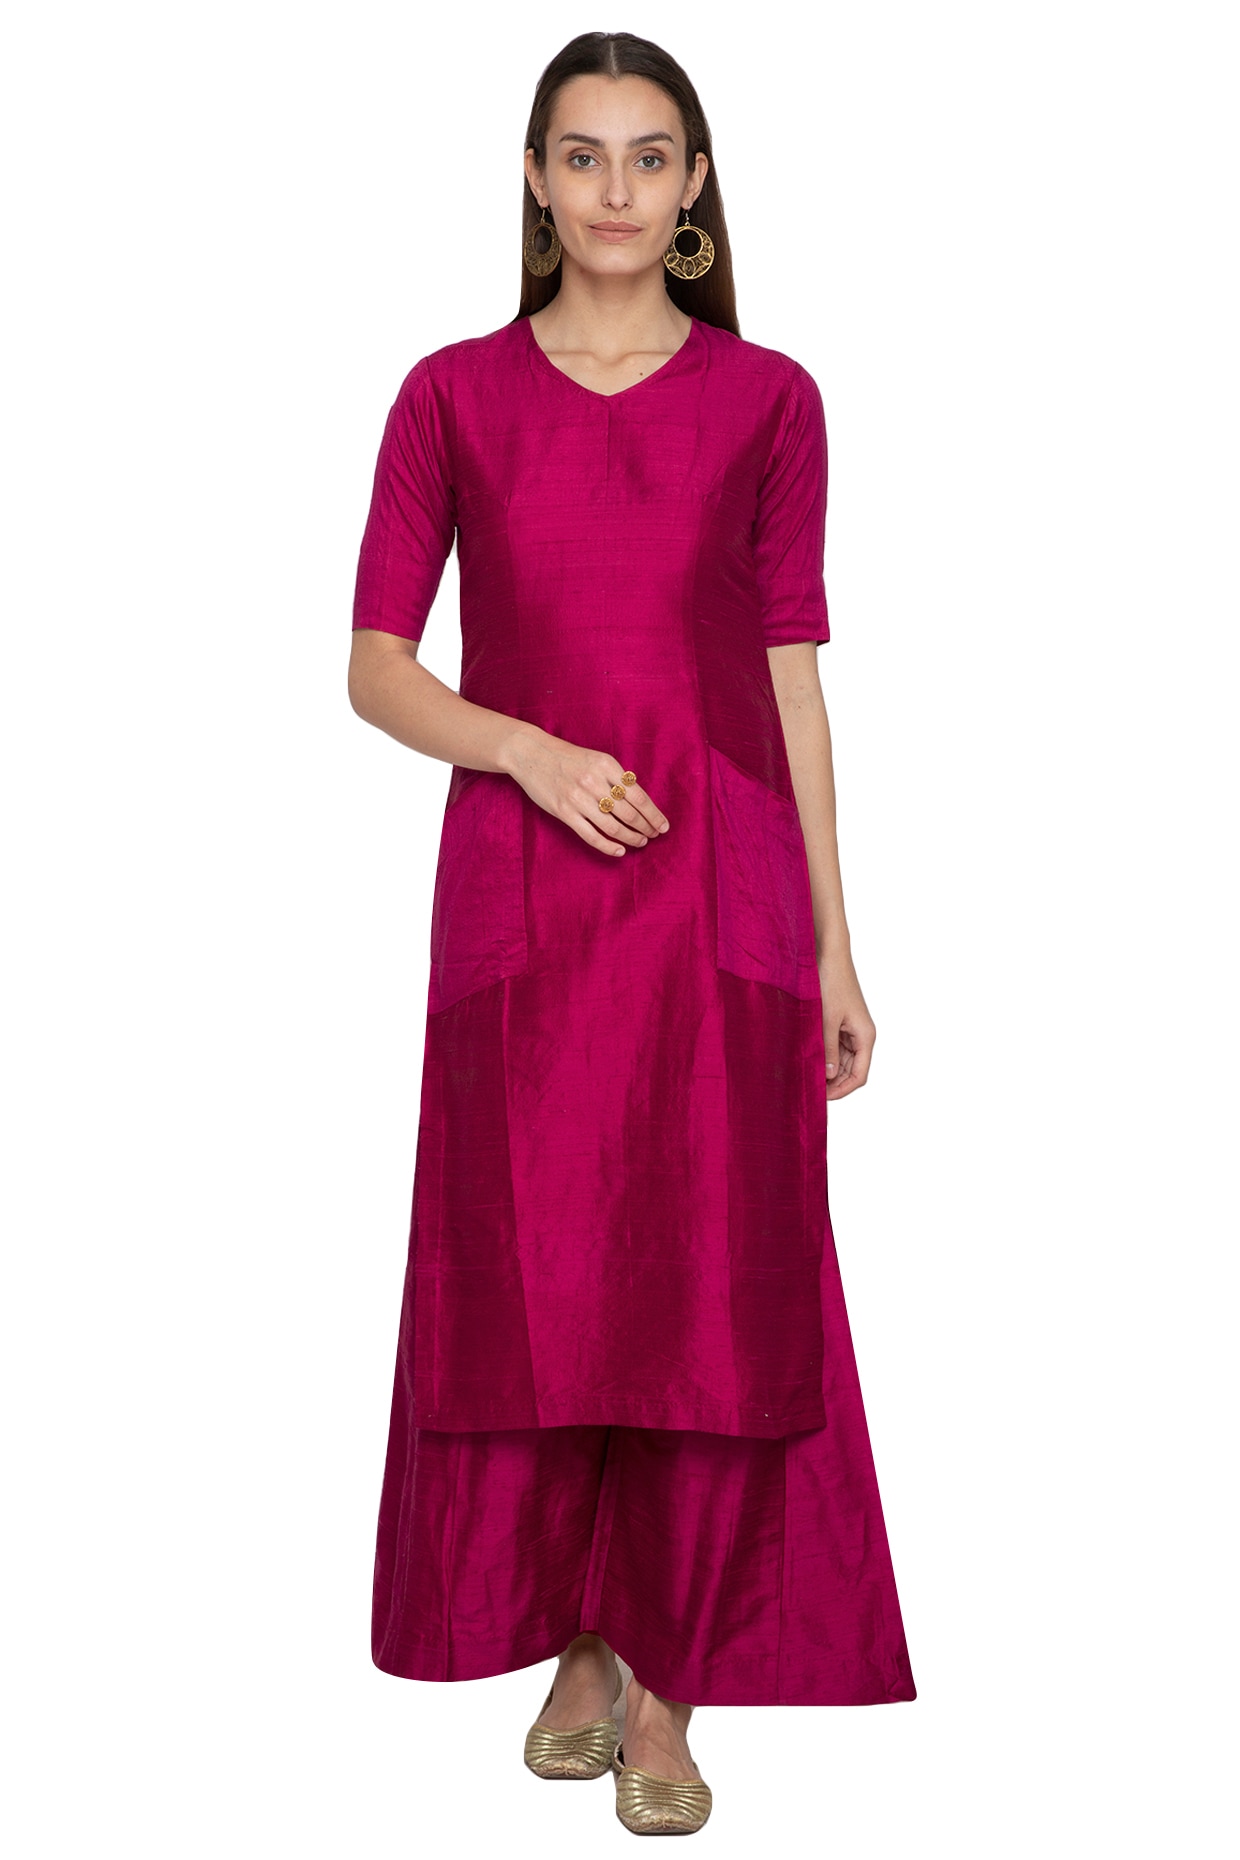 Buy iMithila Women's Madhubani Khadi Silk Kurti Material for Rakhi, Office  Wear and Special Occasions (KU1119KHS061, Beige, Free Size) at Amazon.in